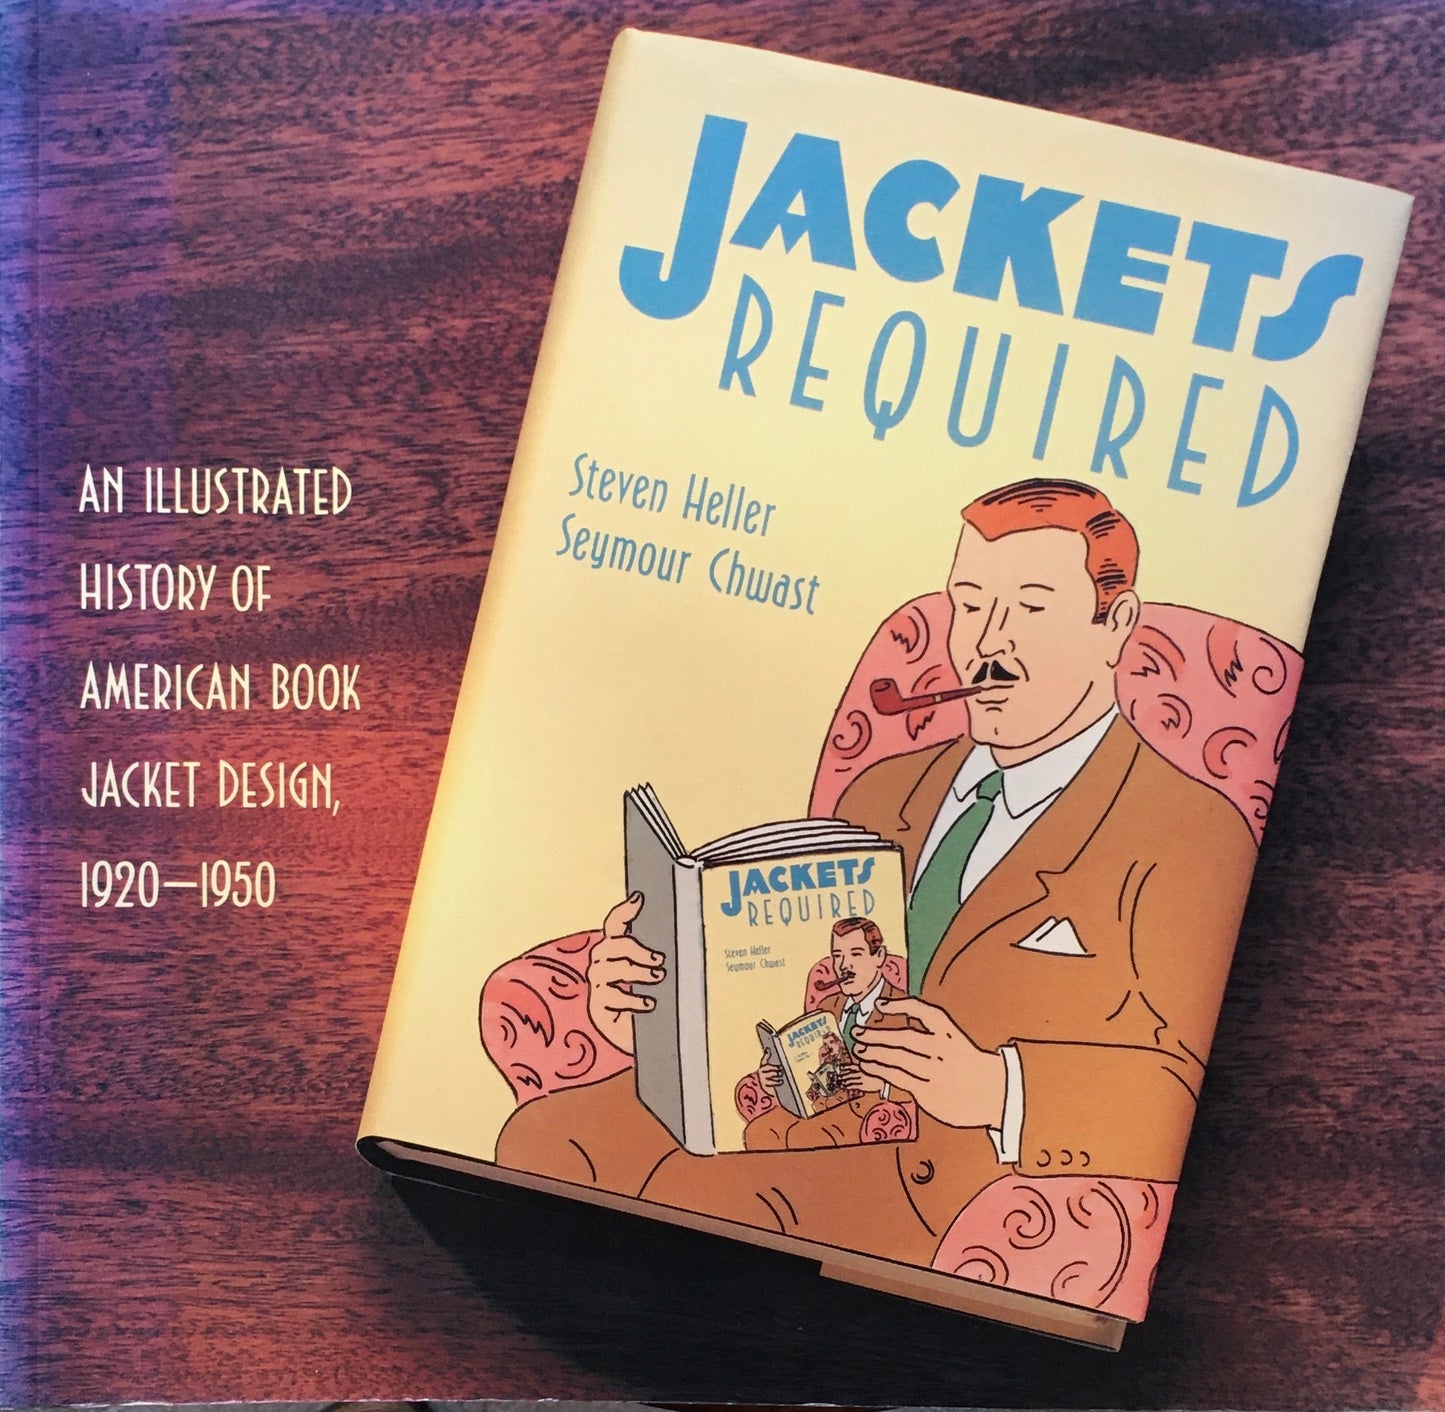 Jackets Required 　Book Jacket Design 1920-1950　Steven Heller　Seymour Chwast 